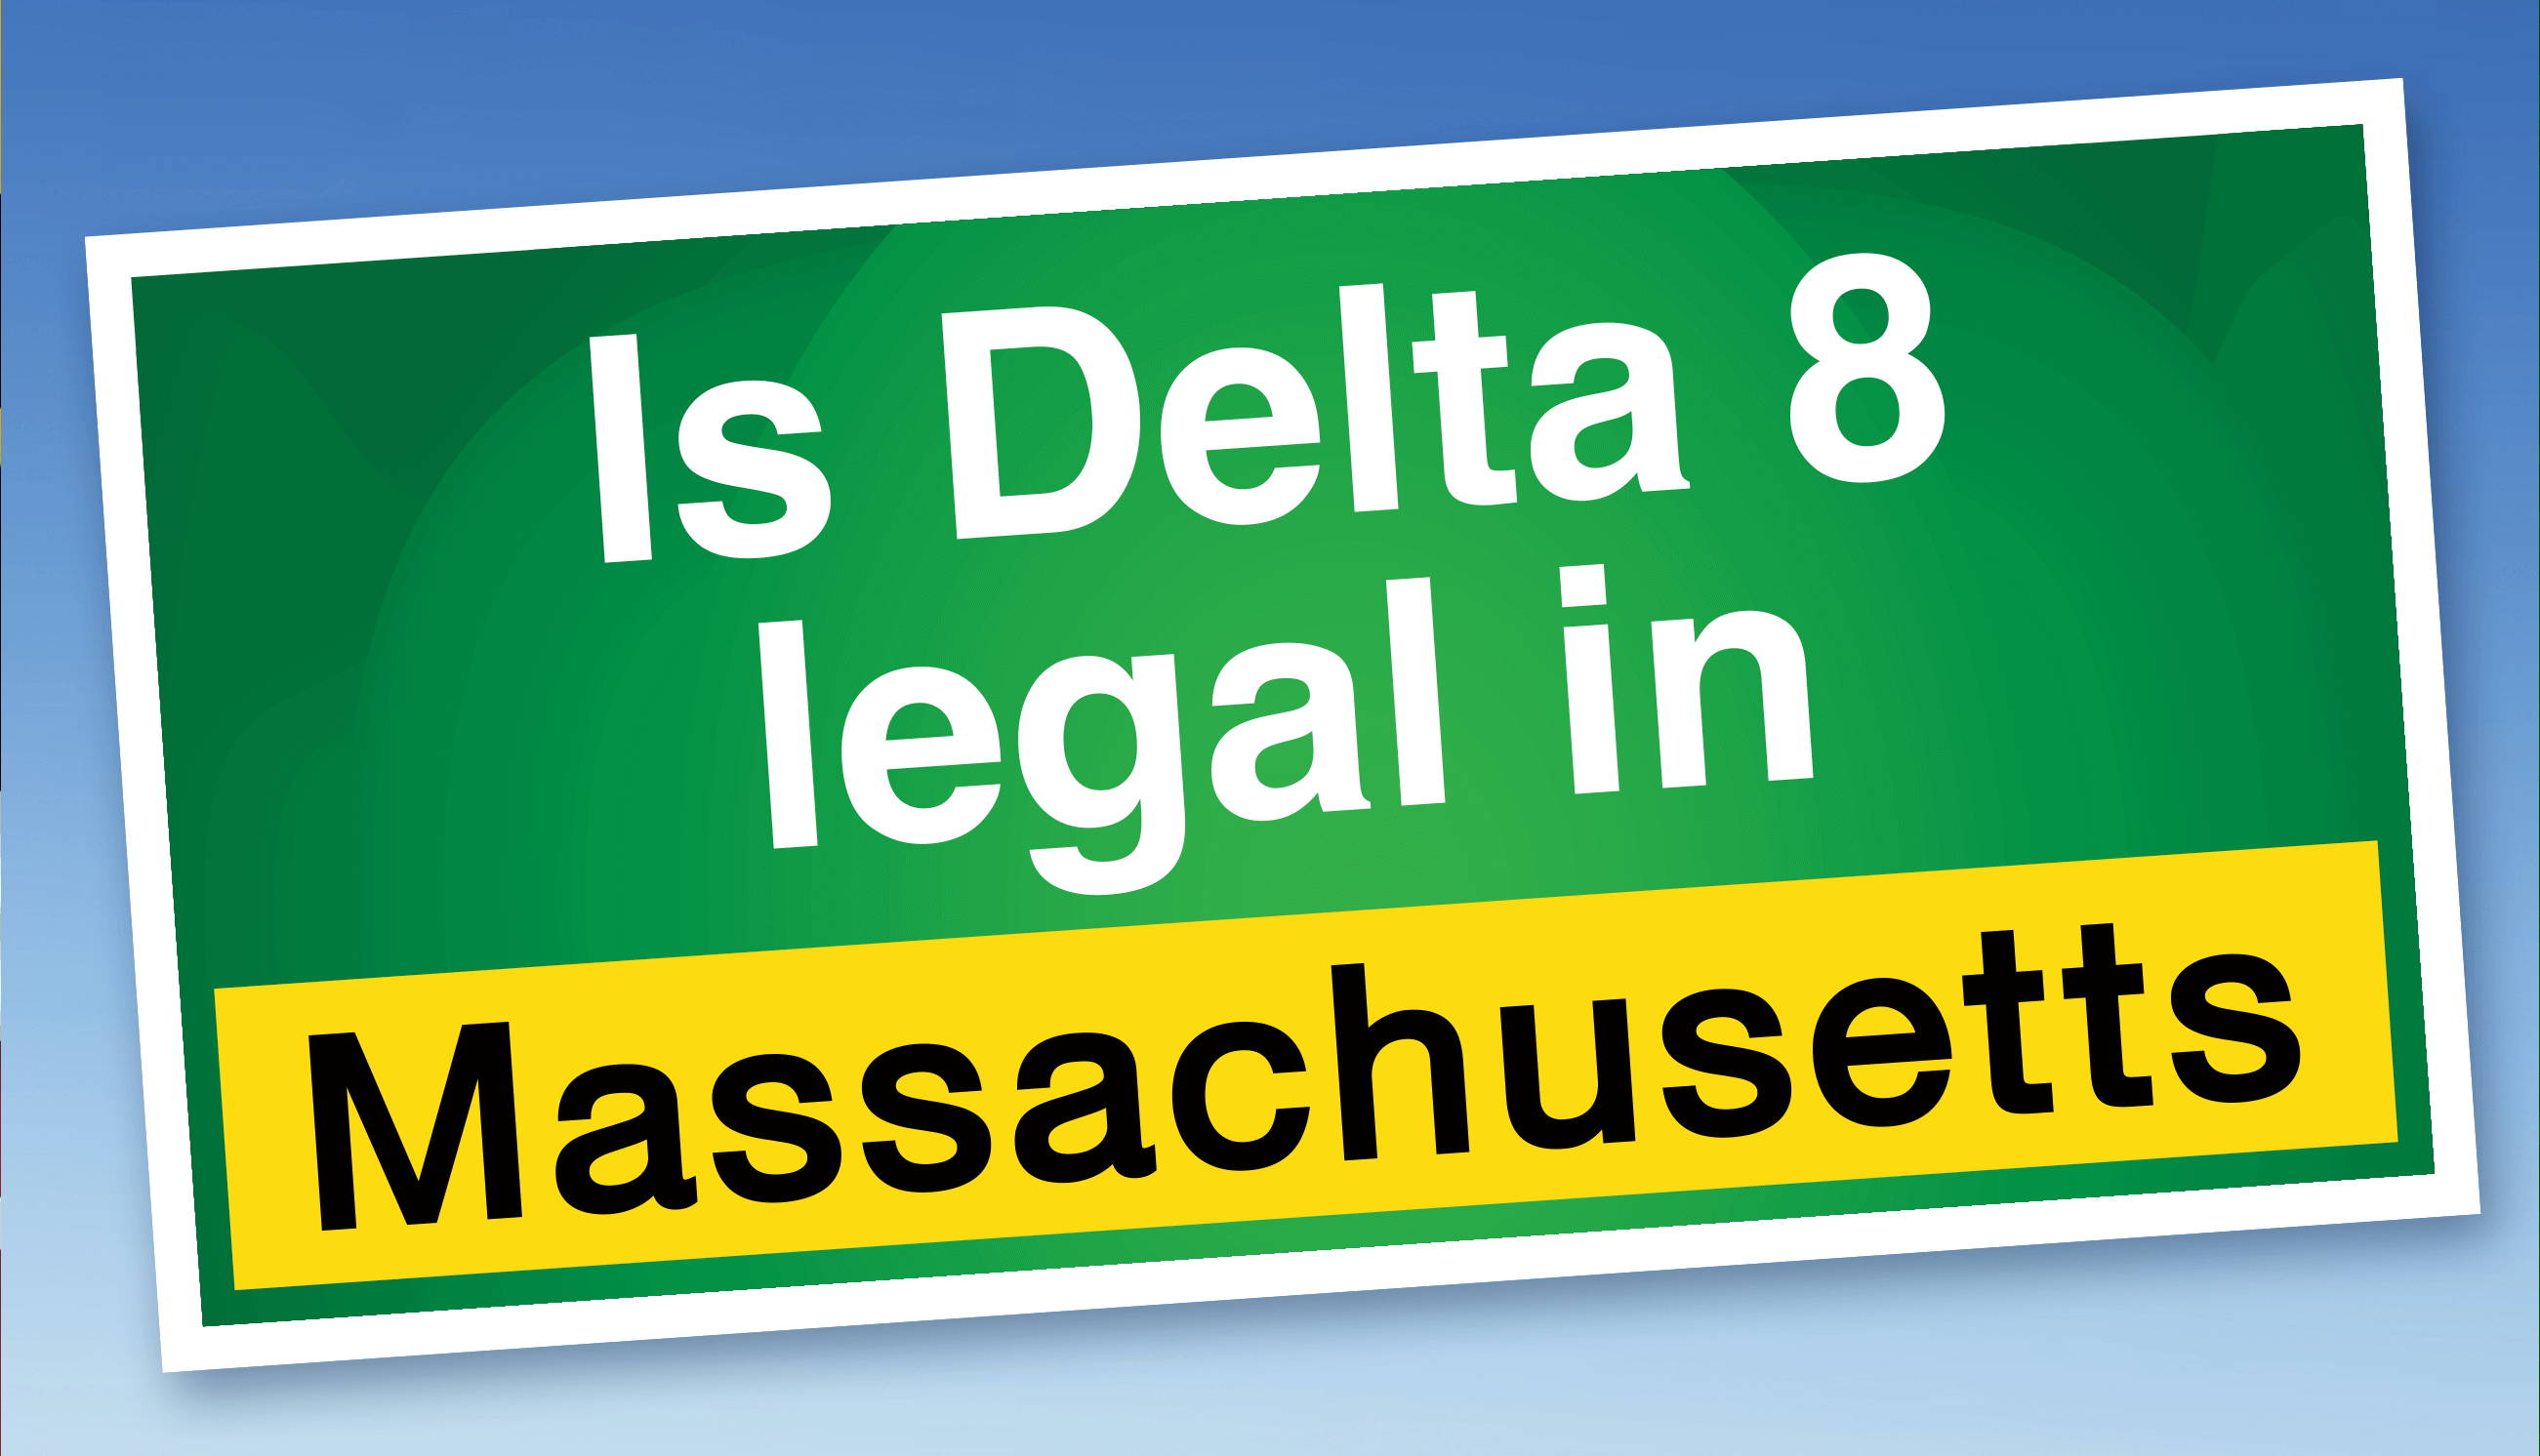 Is Delta 8 legal in Massachusetts